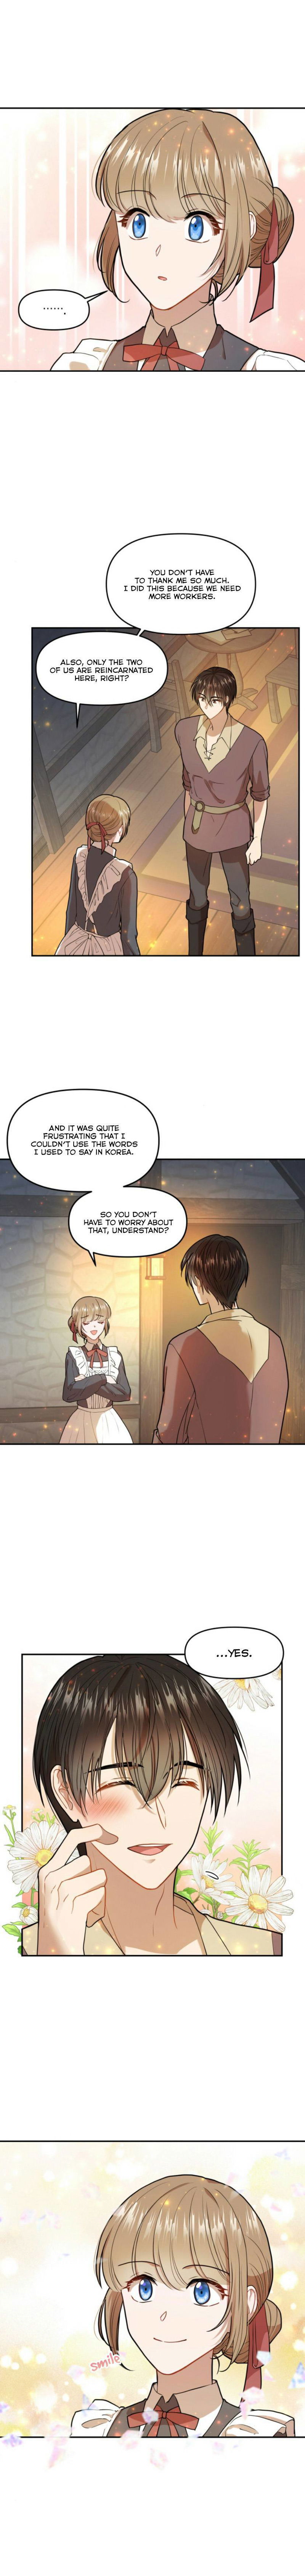 Romance Fantasy Comic Binge Chapter 3 page 4